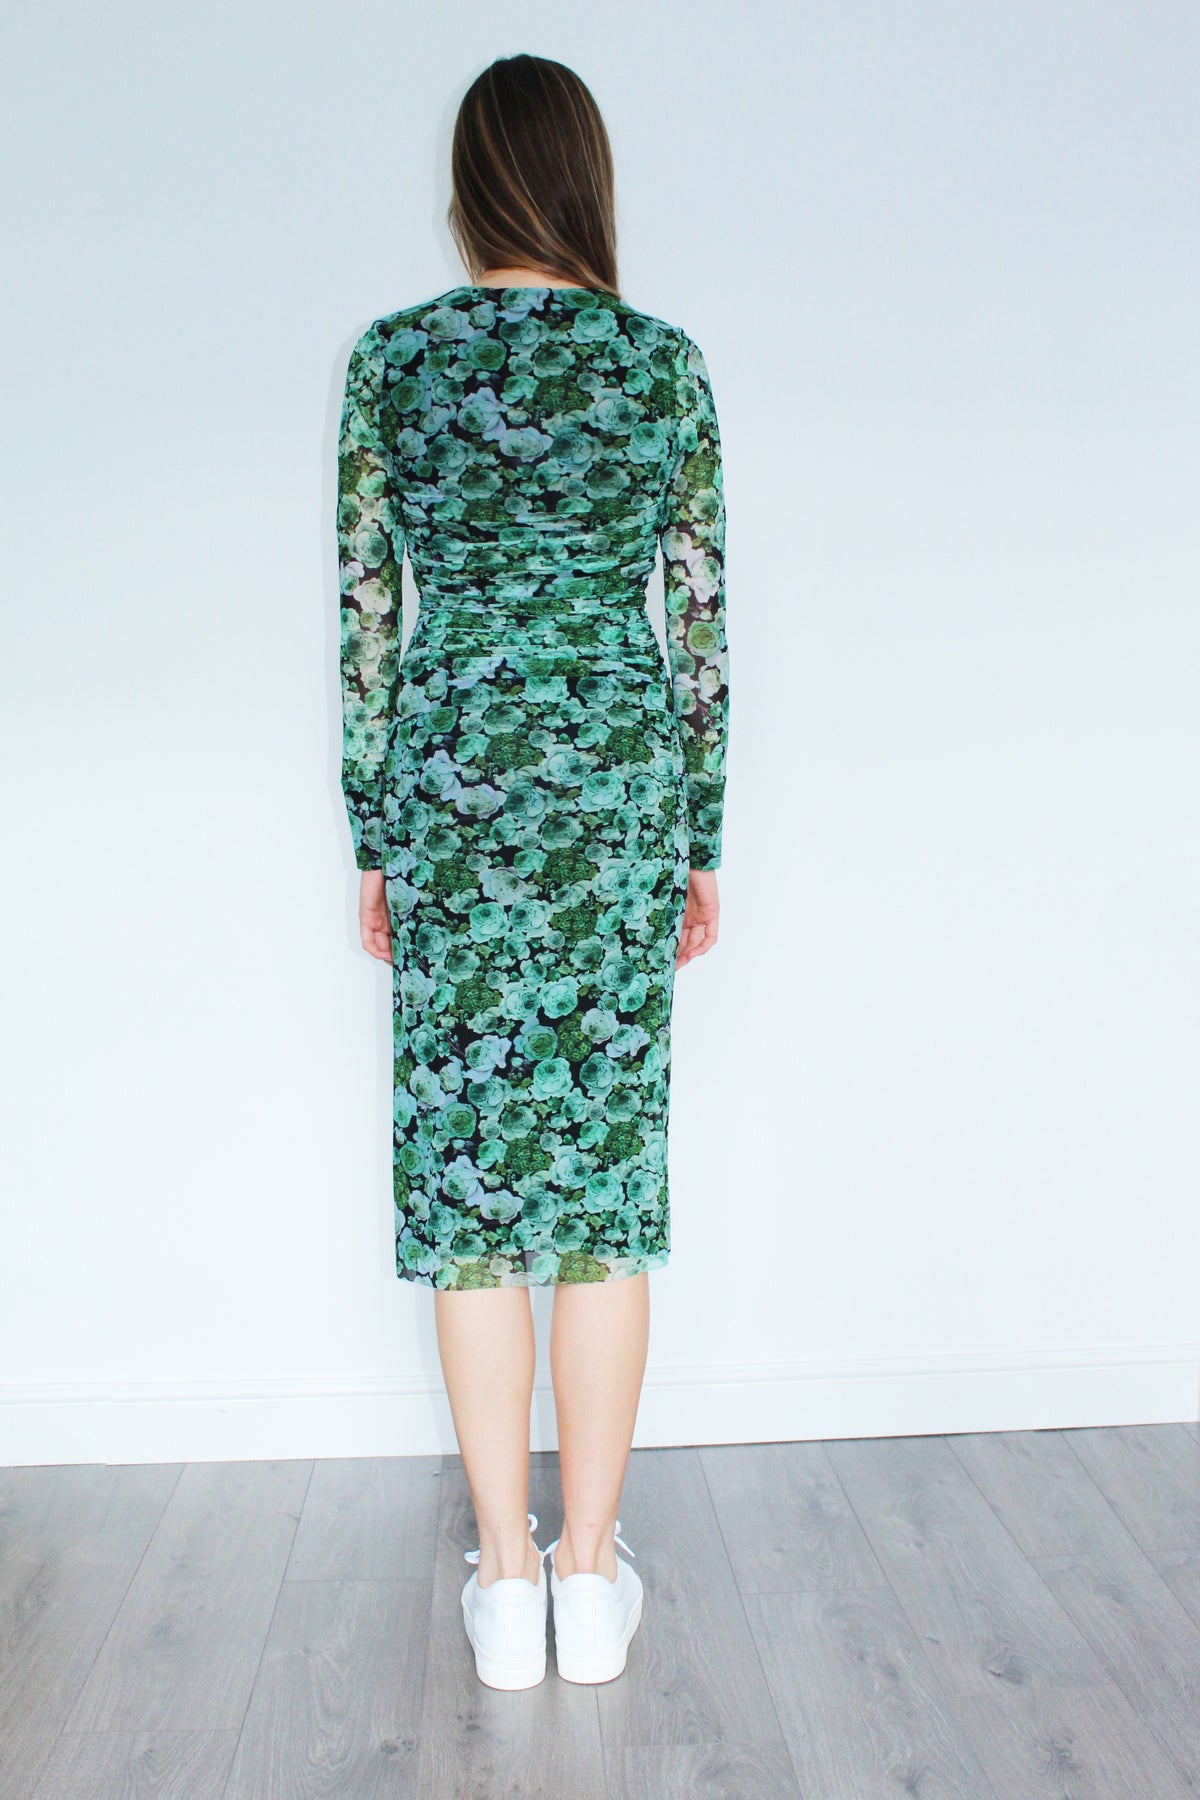 GANNI T2853 Printed Mesh Dress in Kelly Green